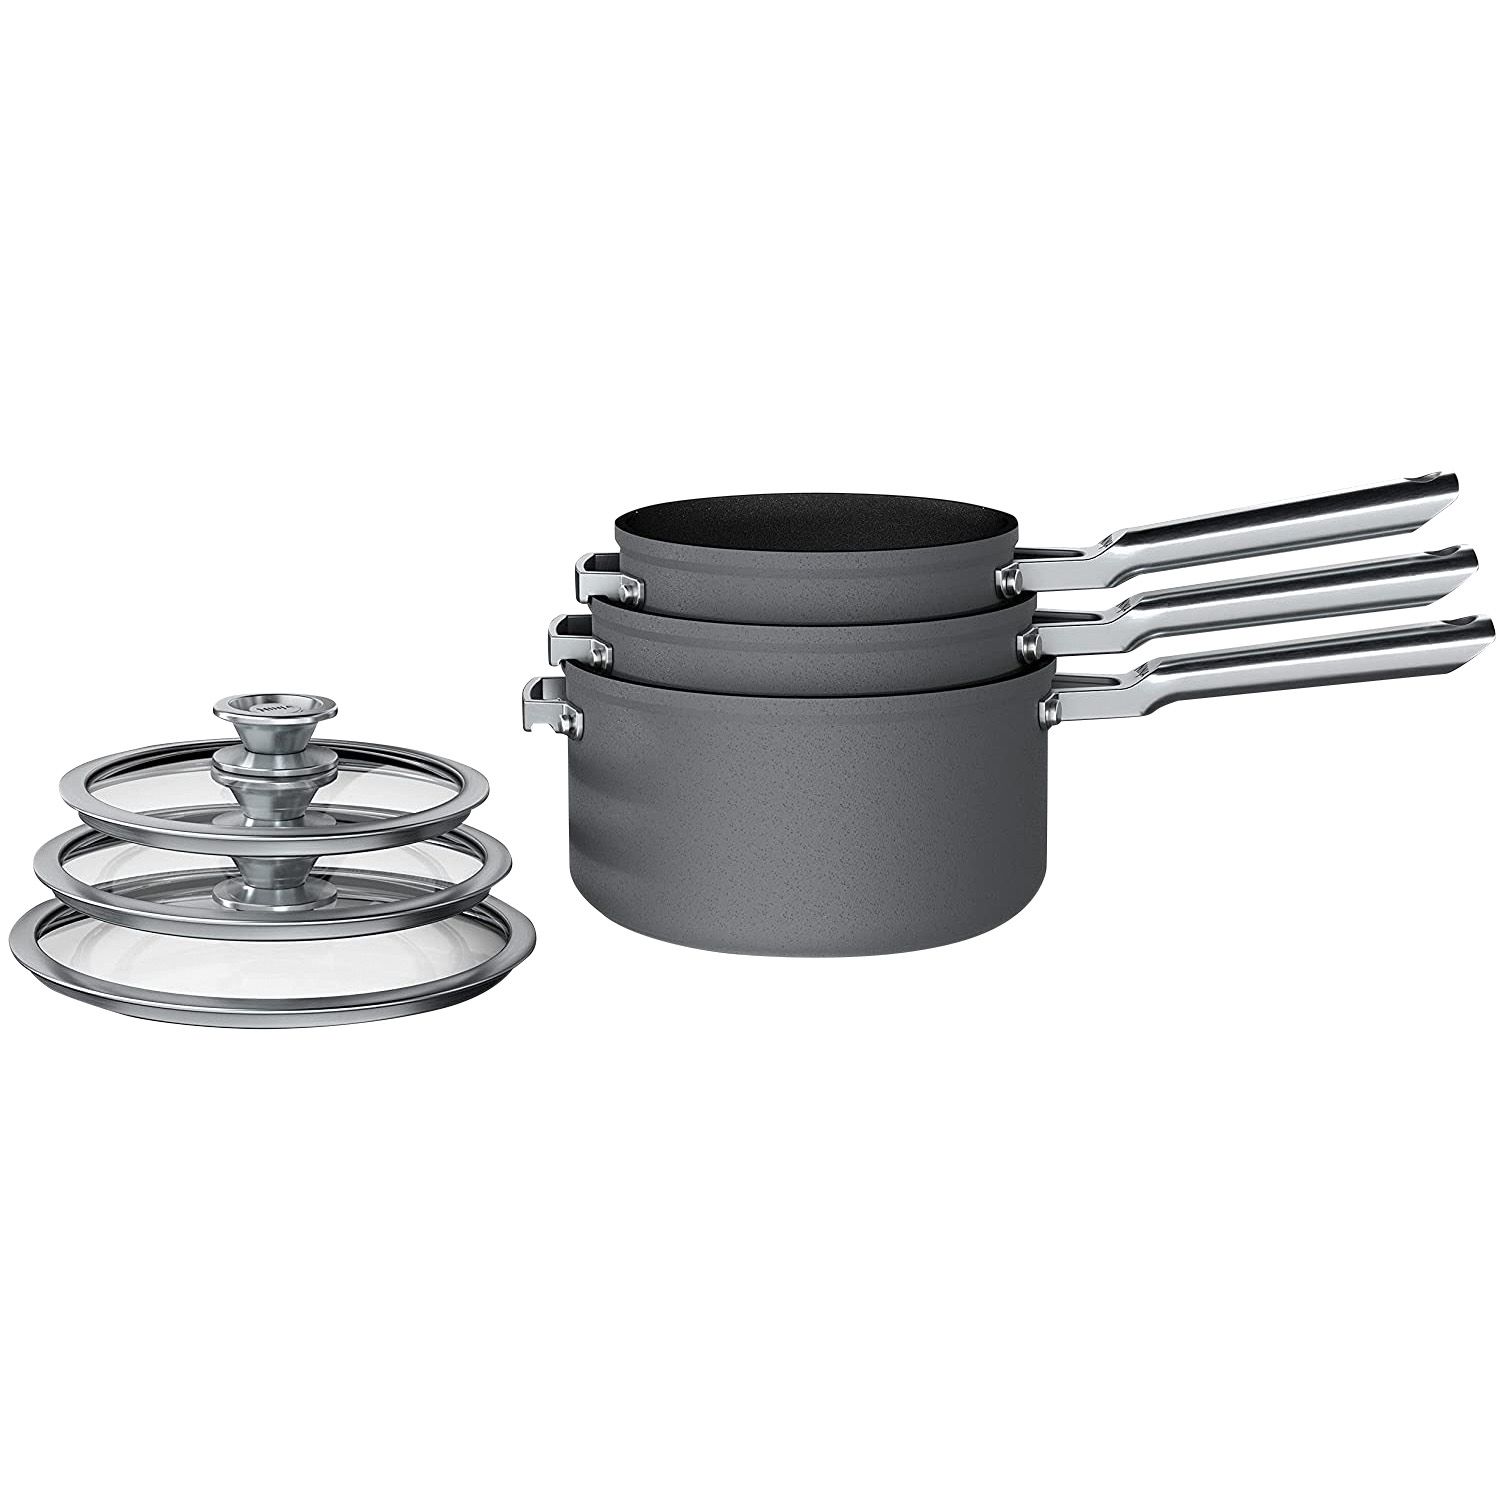 Fingerhut - Ninja Foodi NeverStick 12-Pc. Aluminum Cookware Set